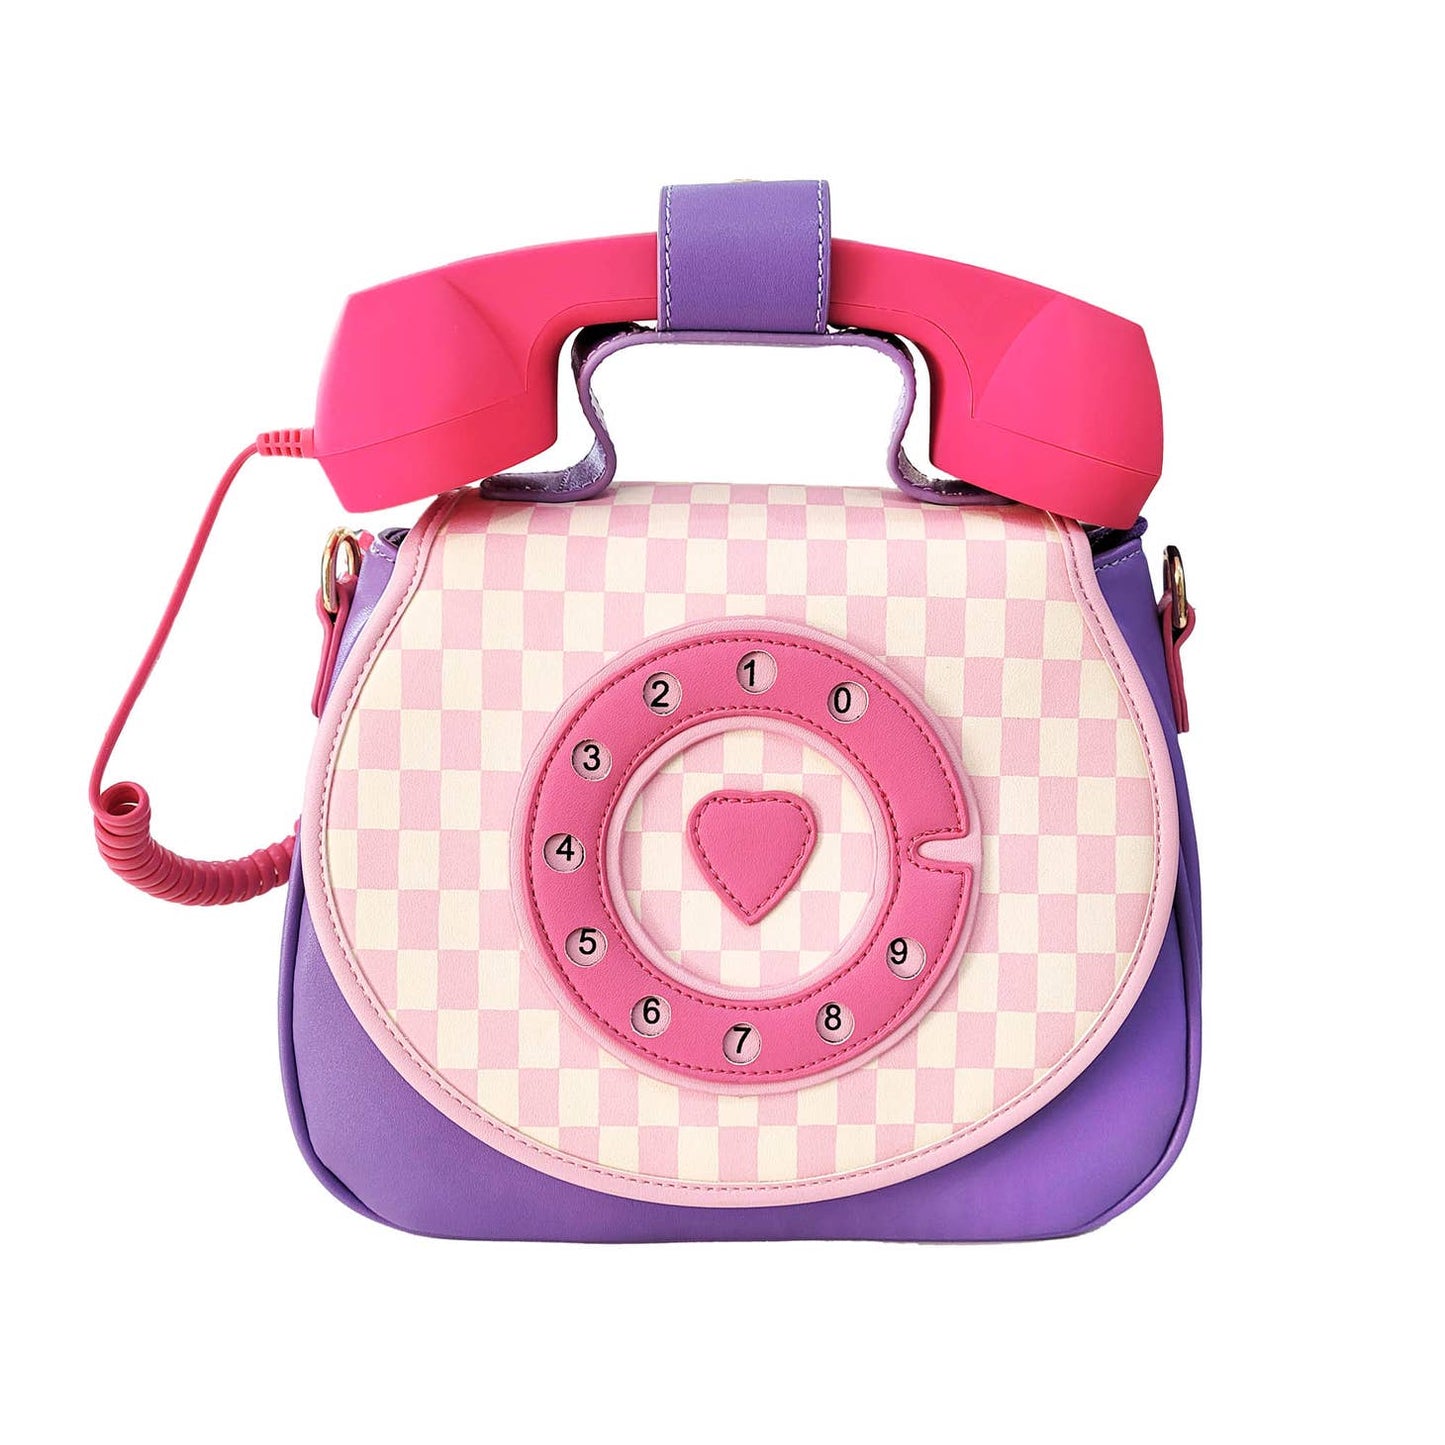 Bewaltz - Ring Ring Phone Convertible Handbag